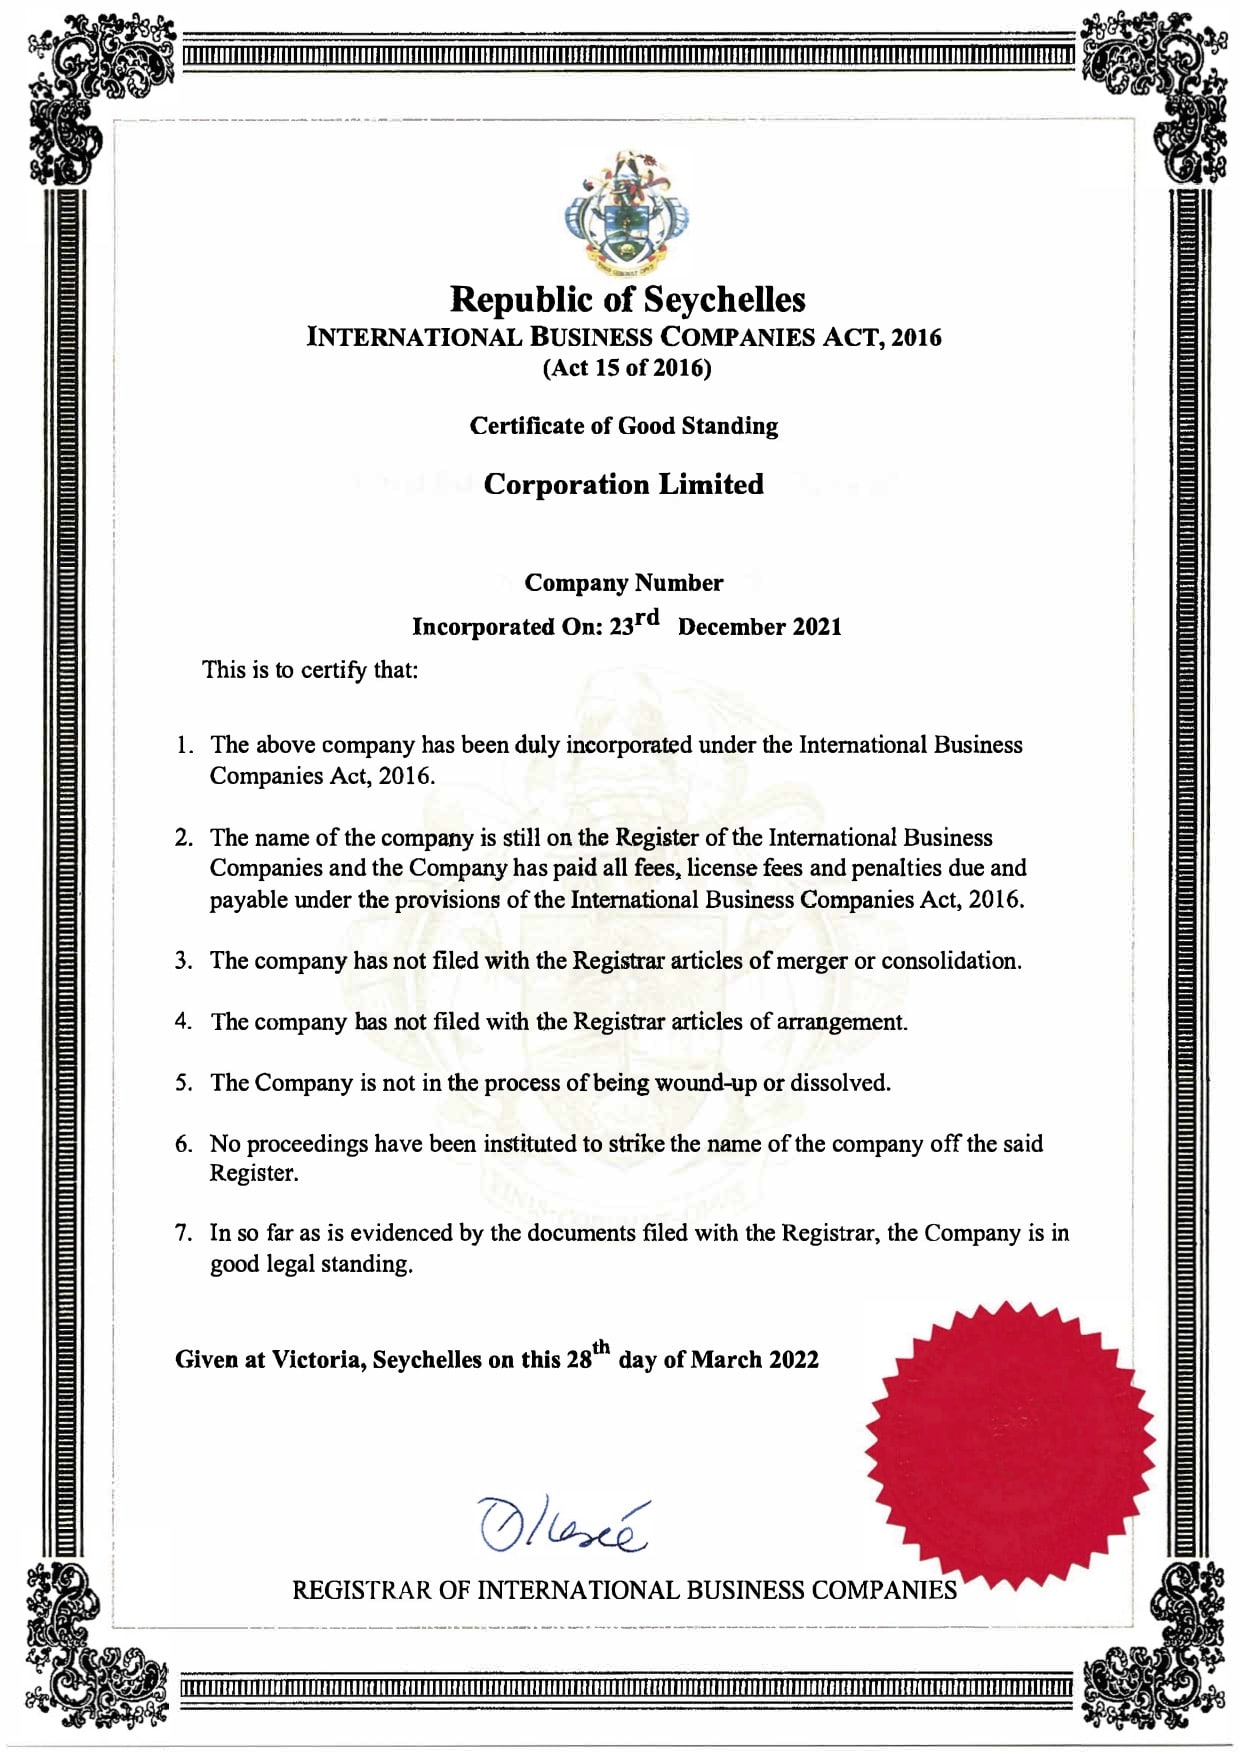 Certificate of Good Standing Commercial Register of Seychelles